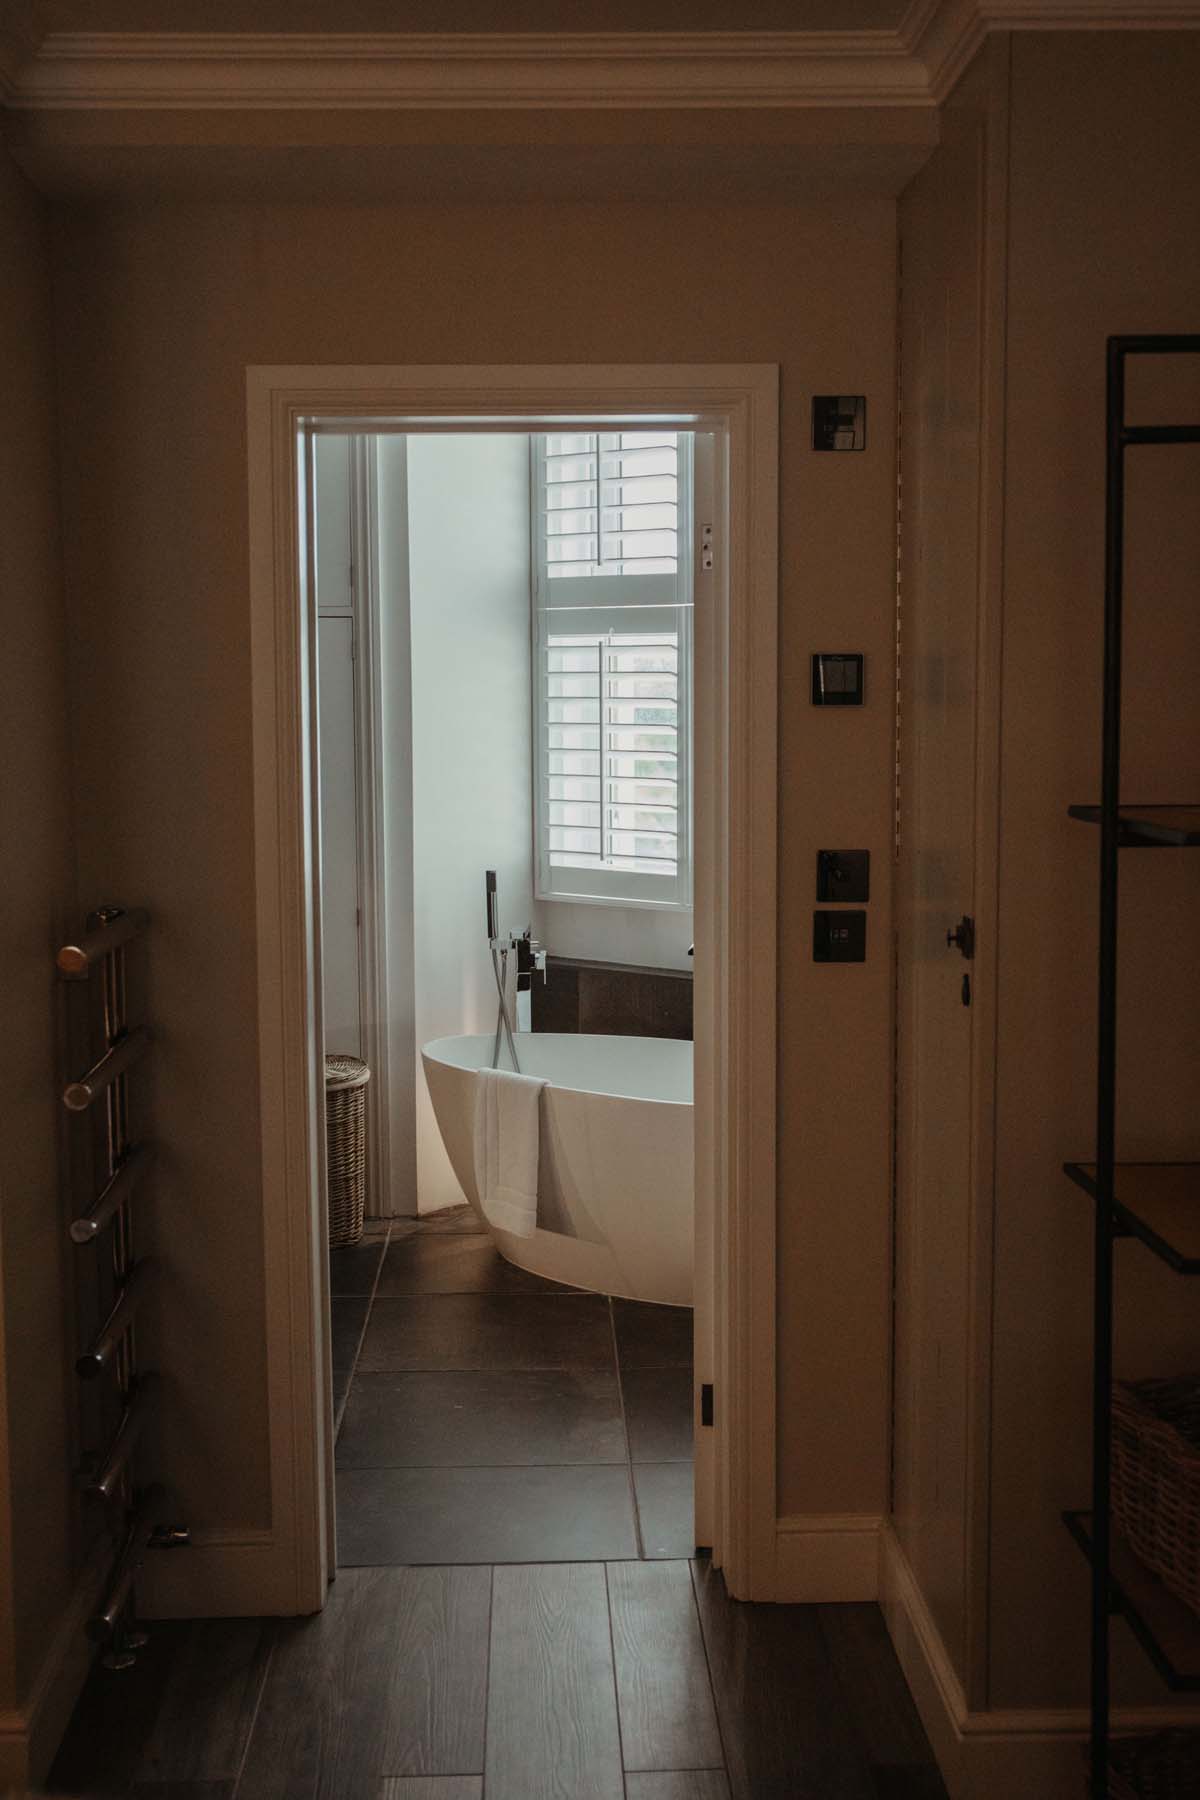 Doorway to bathroom with modern white bath